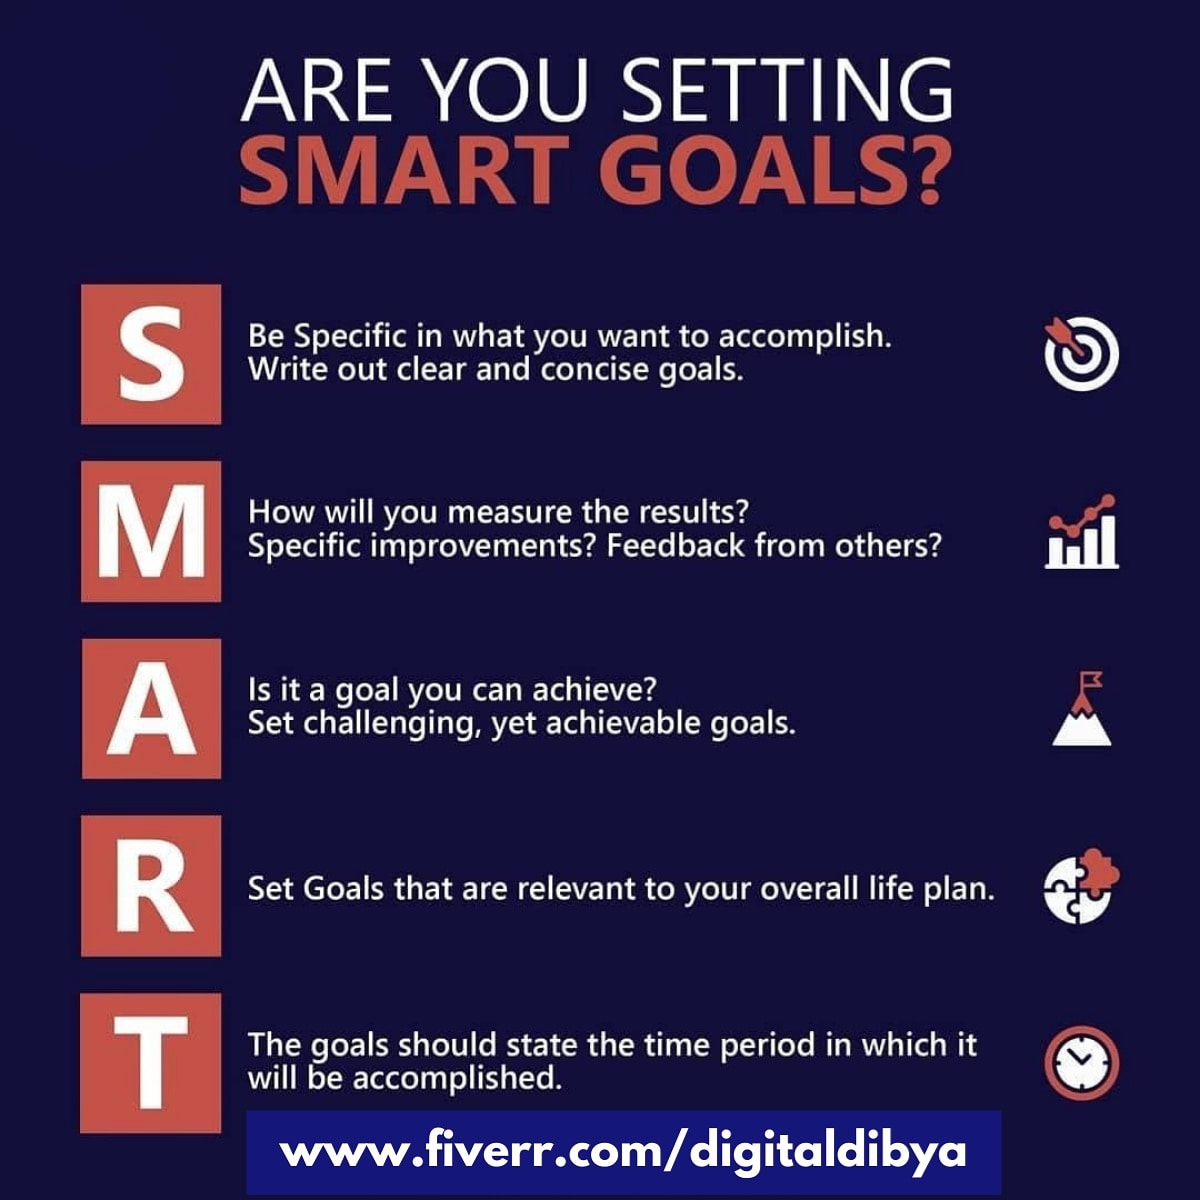 Are you setting your SMART goal ? #DigitalIndia #DigitalMarketingServices #digitalmarketingtips #smallbusinessowners #digitaldibya #usabusiness